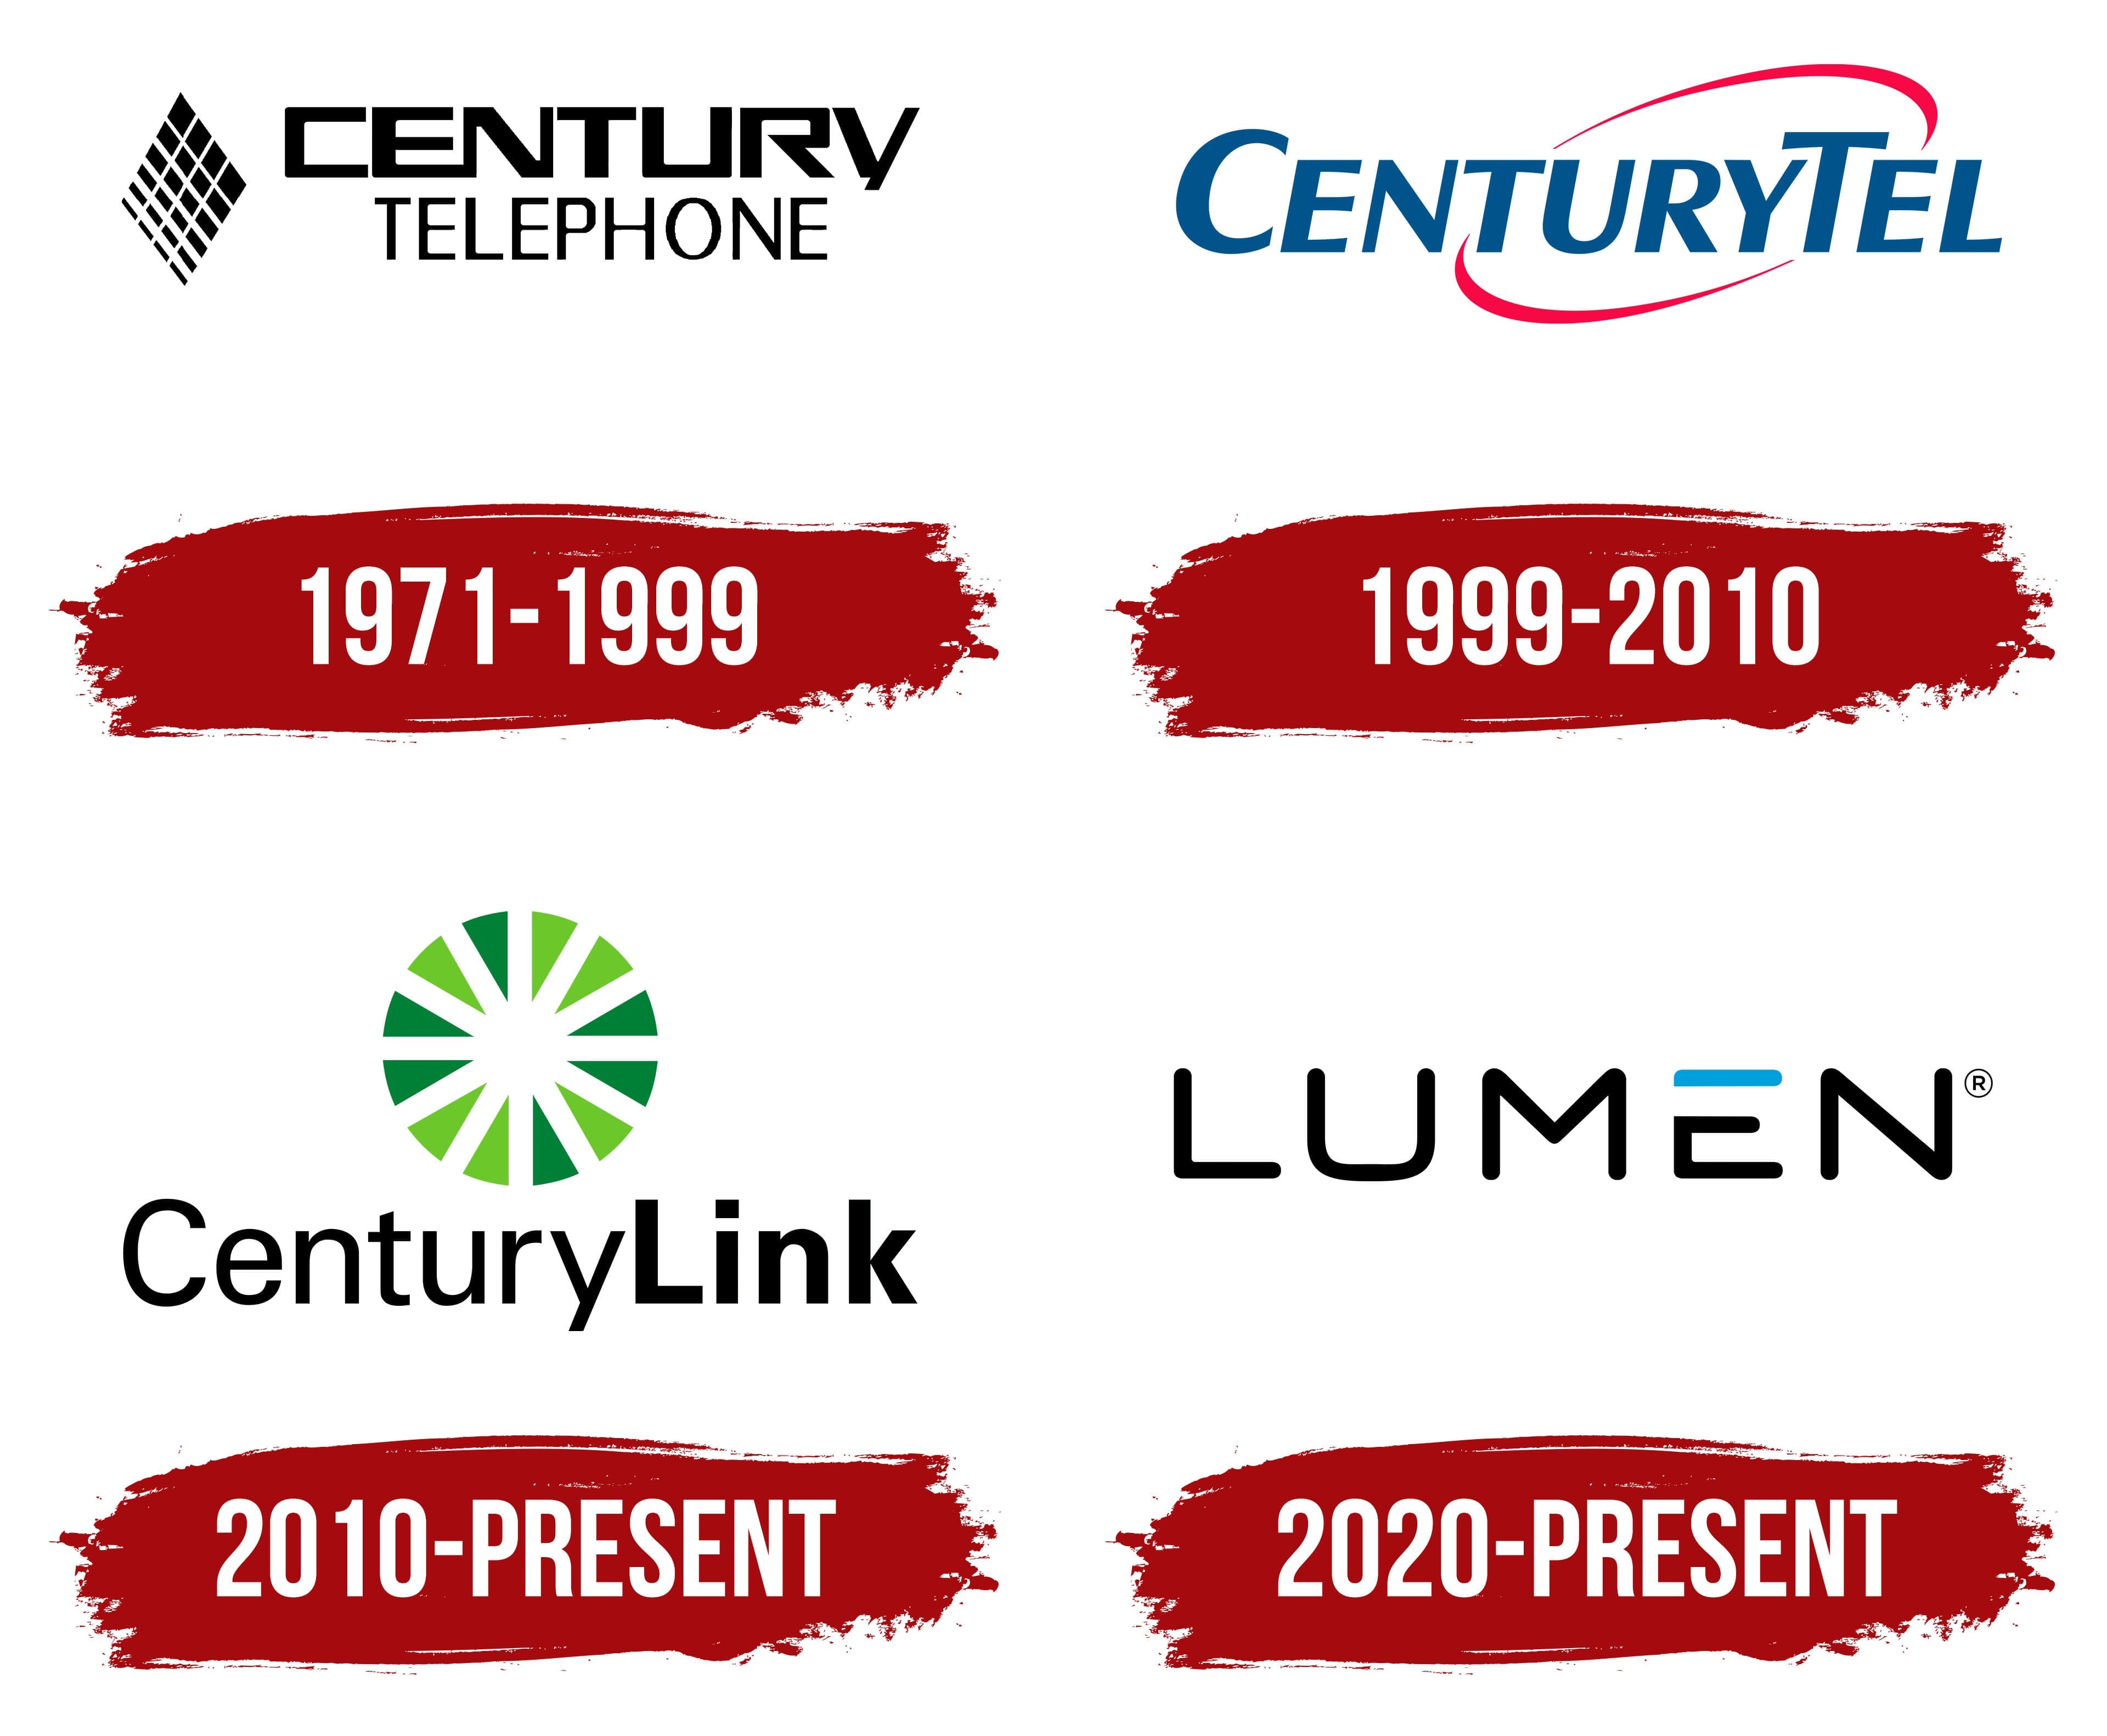 Residential Services: Home Internet, TV, & Phone | CenturyLink